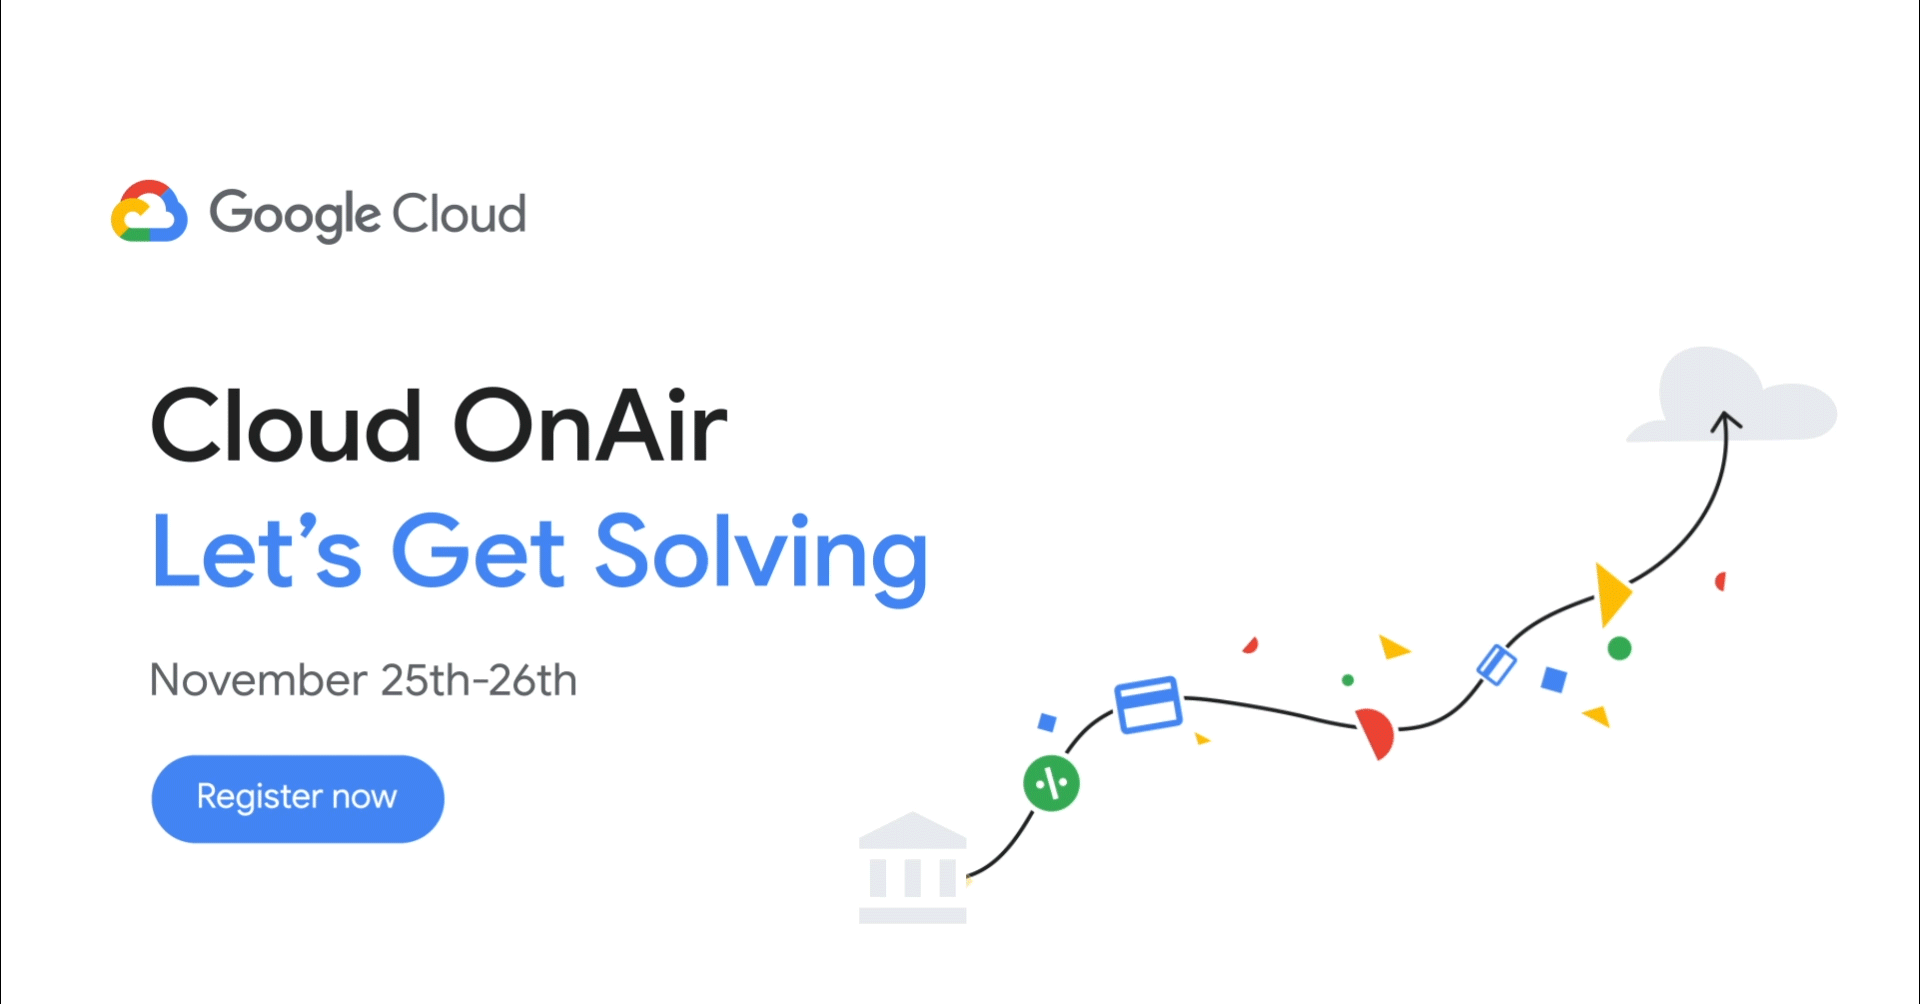 Google Cloud Cloud on Air